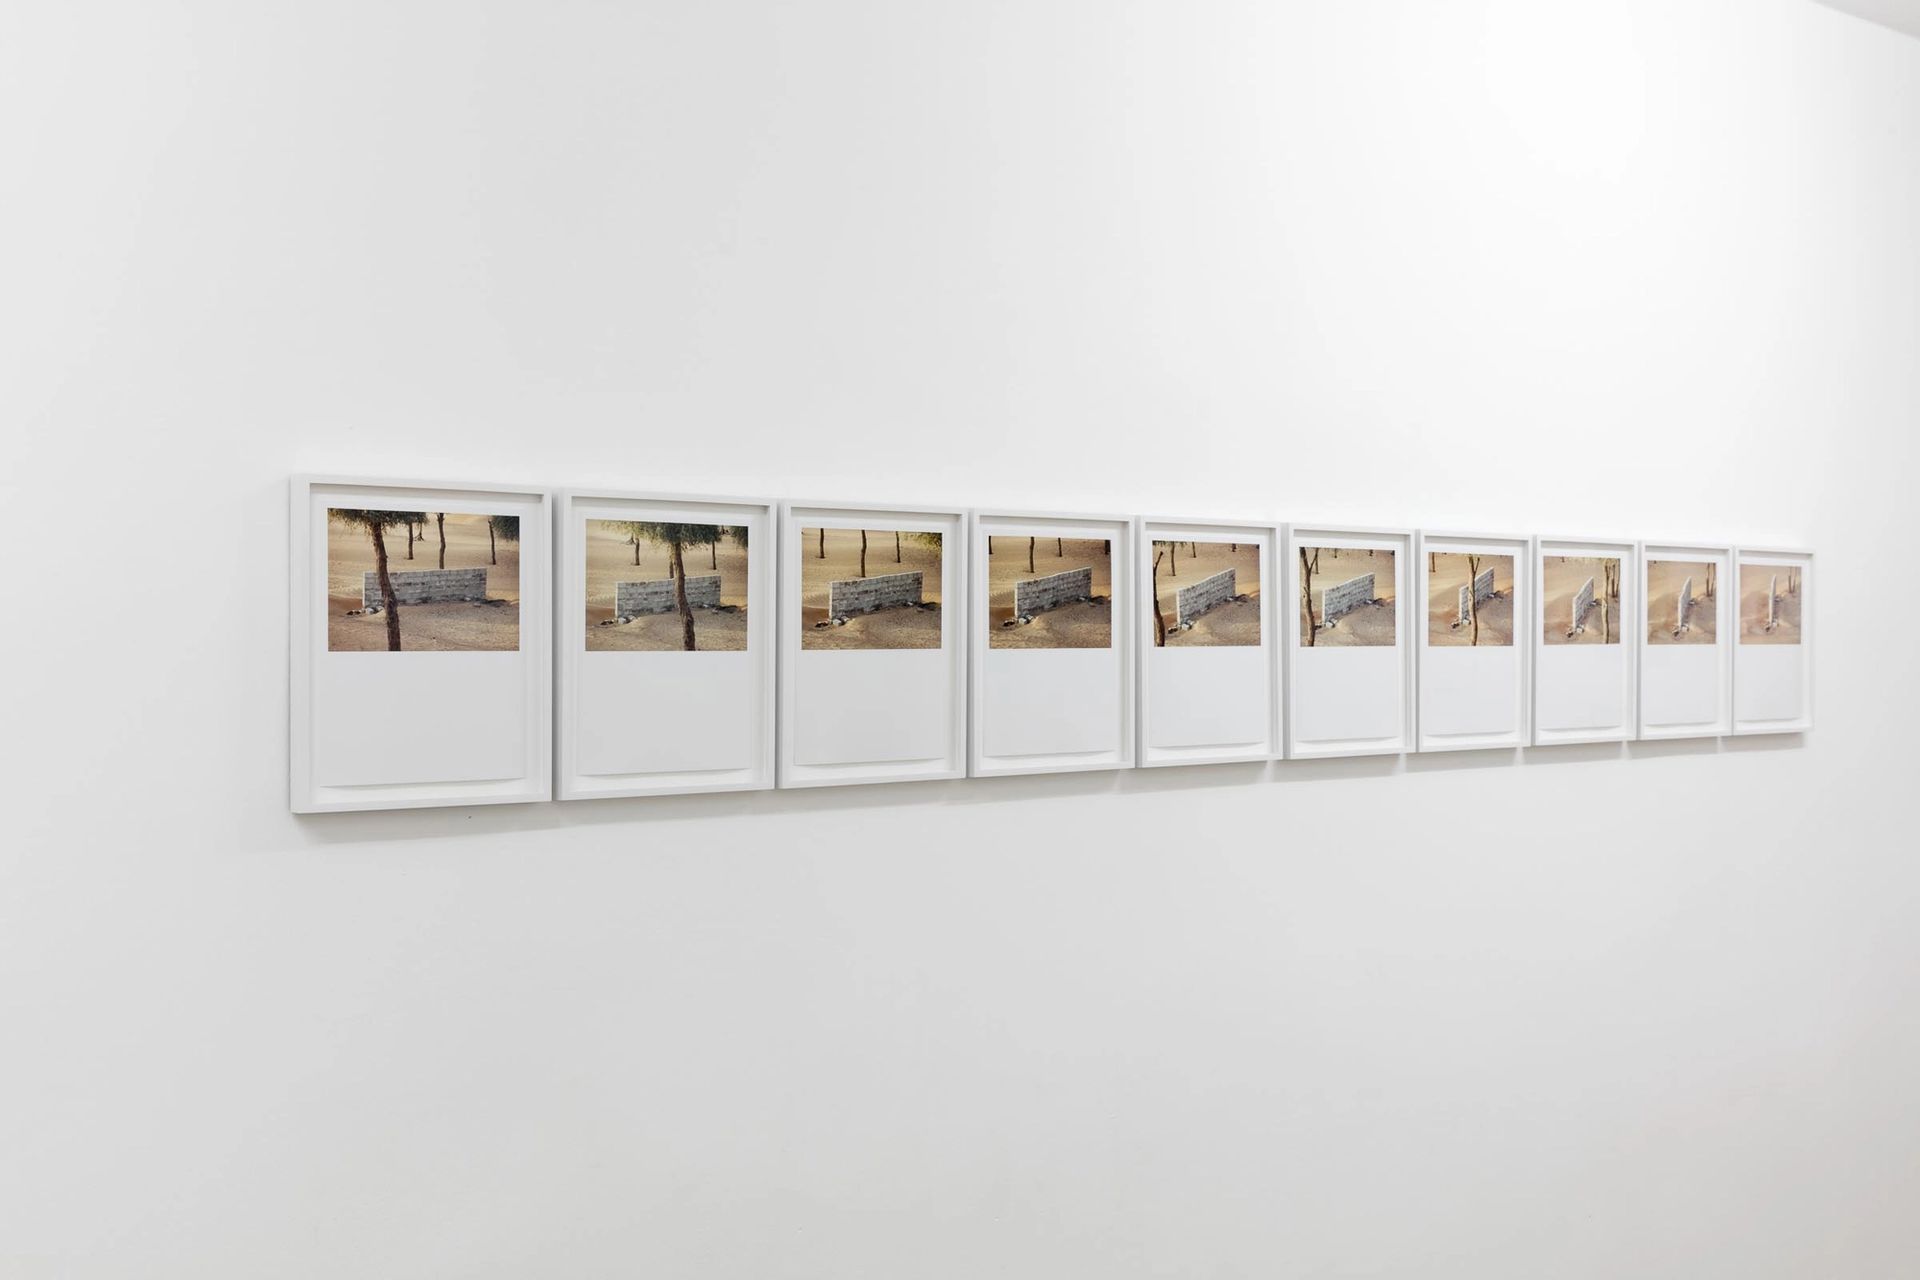 Daniel Gustav Cramer, Tales (Nazwa, United Arab Emirates, October 2017), 2017, 10 c-prints, framed, each 25 × 20 cm 